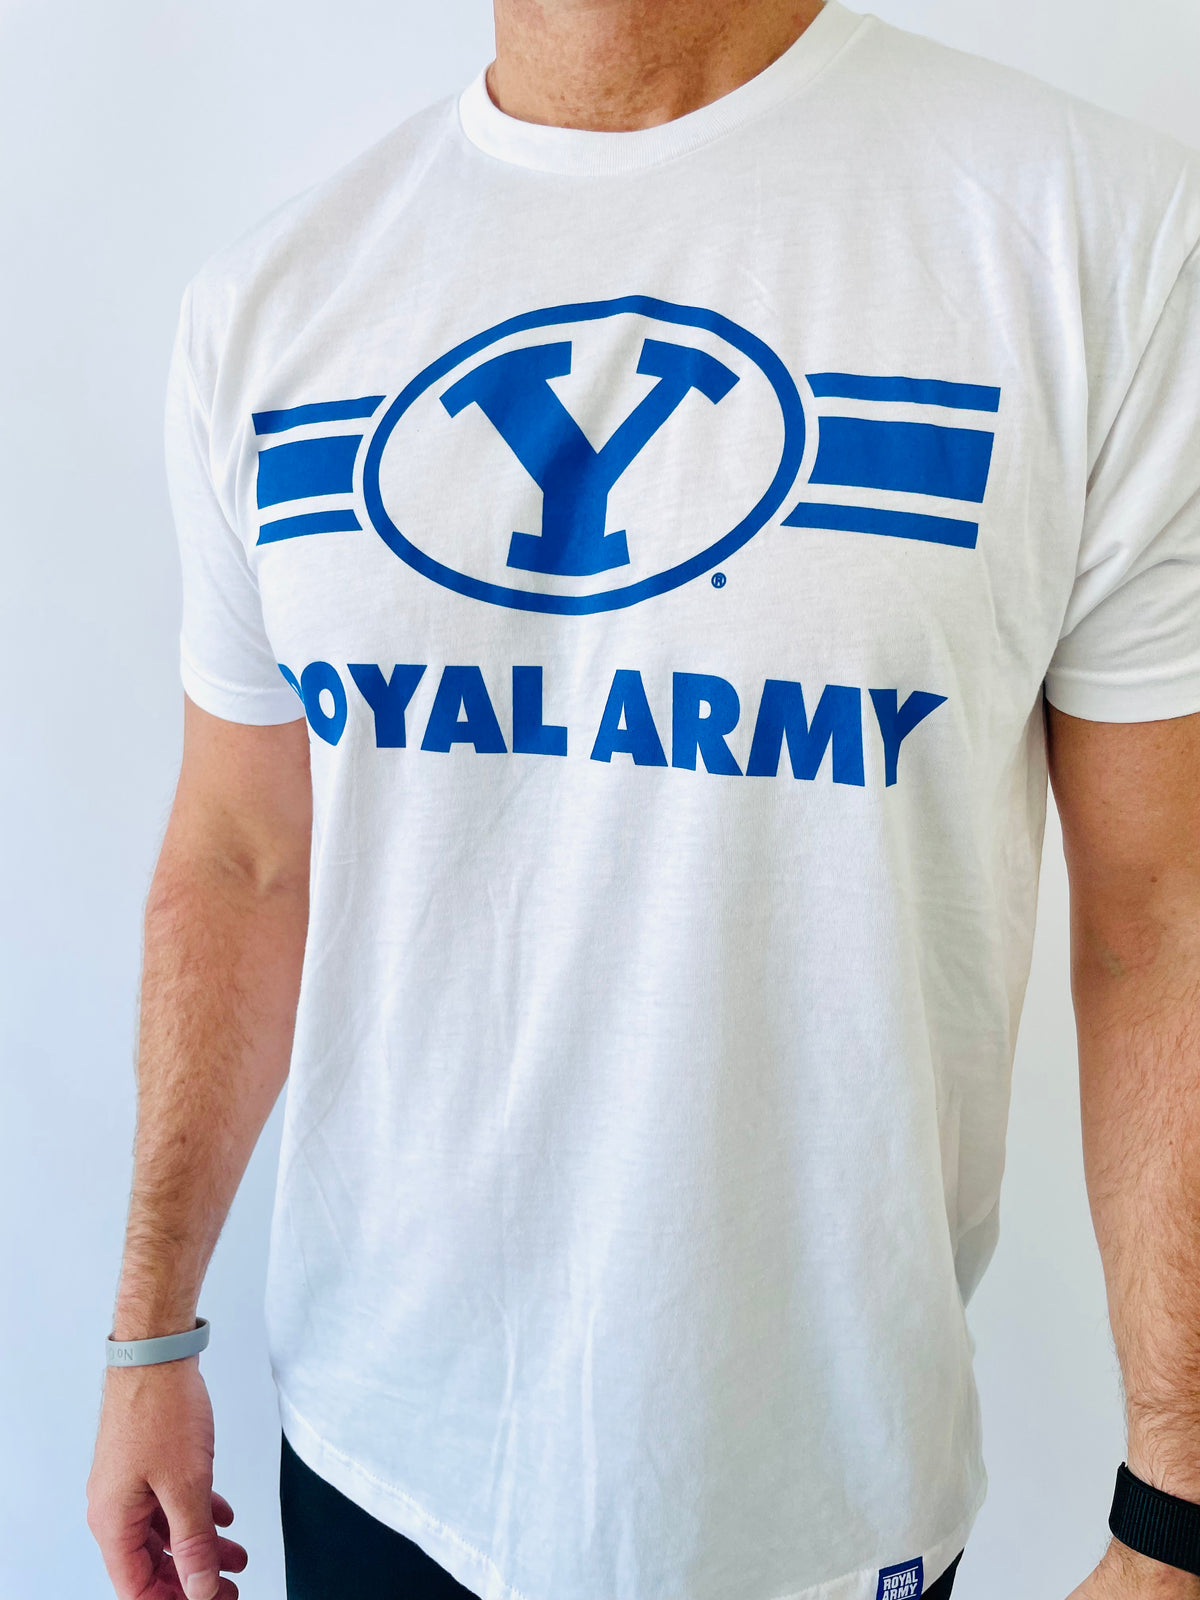 Royal Army Striped Y Logo T-Shirt